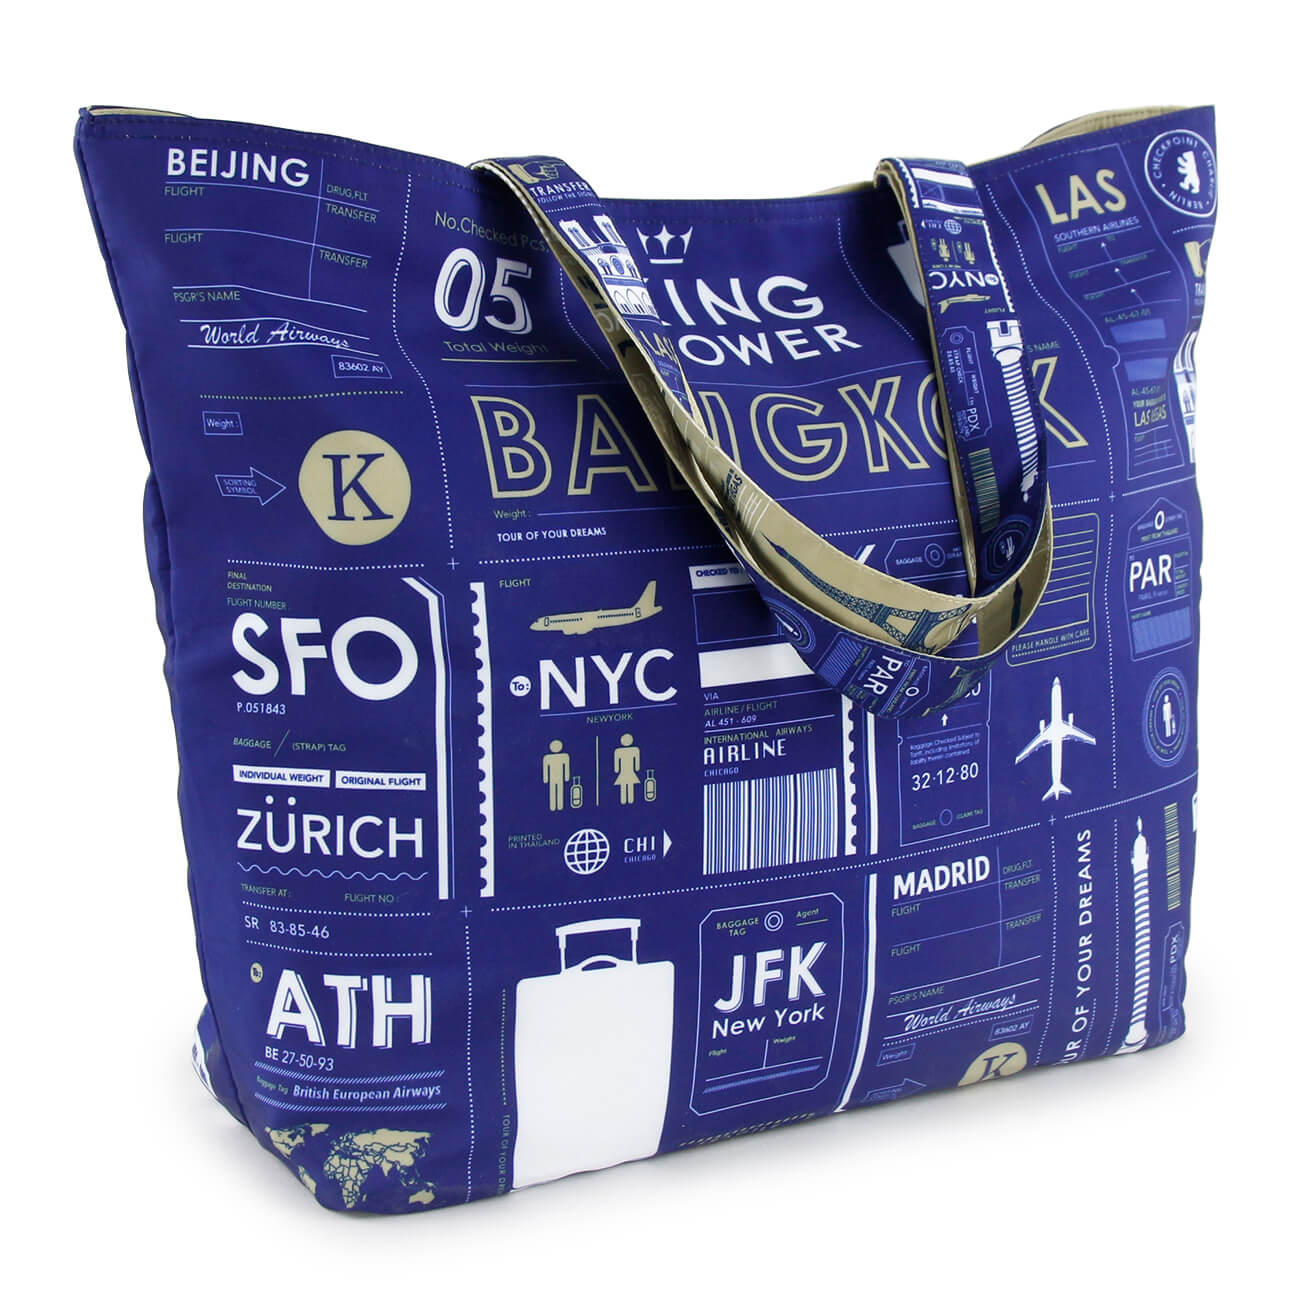 Nylon Travel Tote Bag For Women and Girls